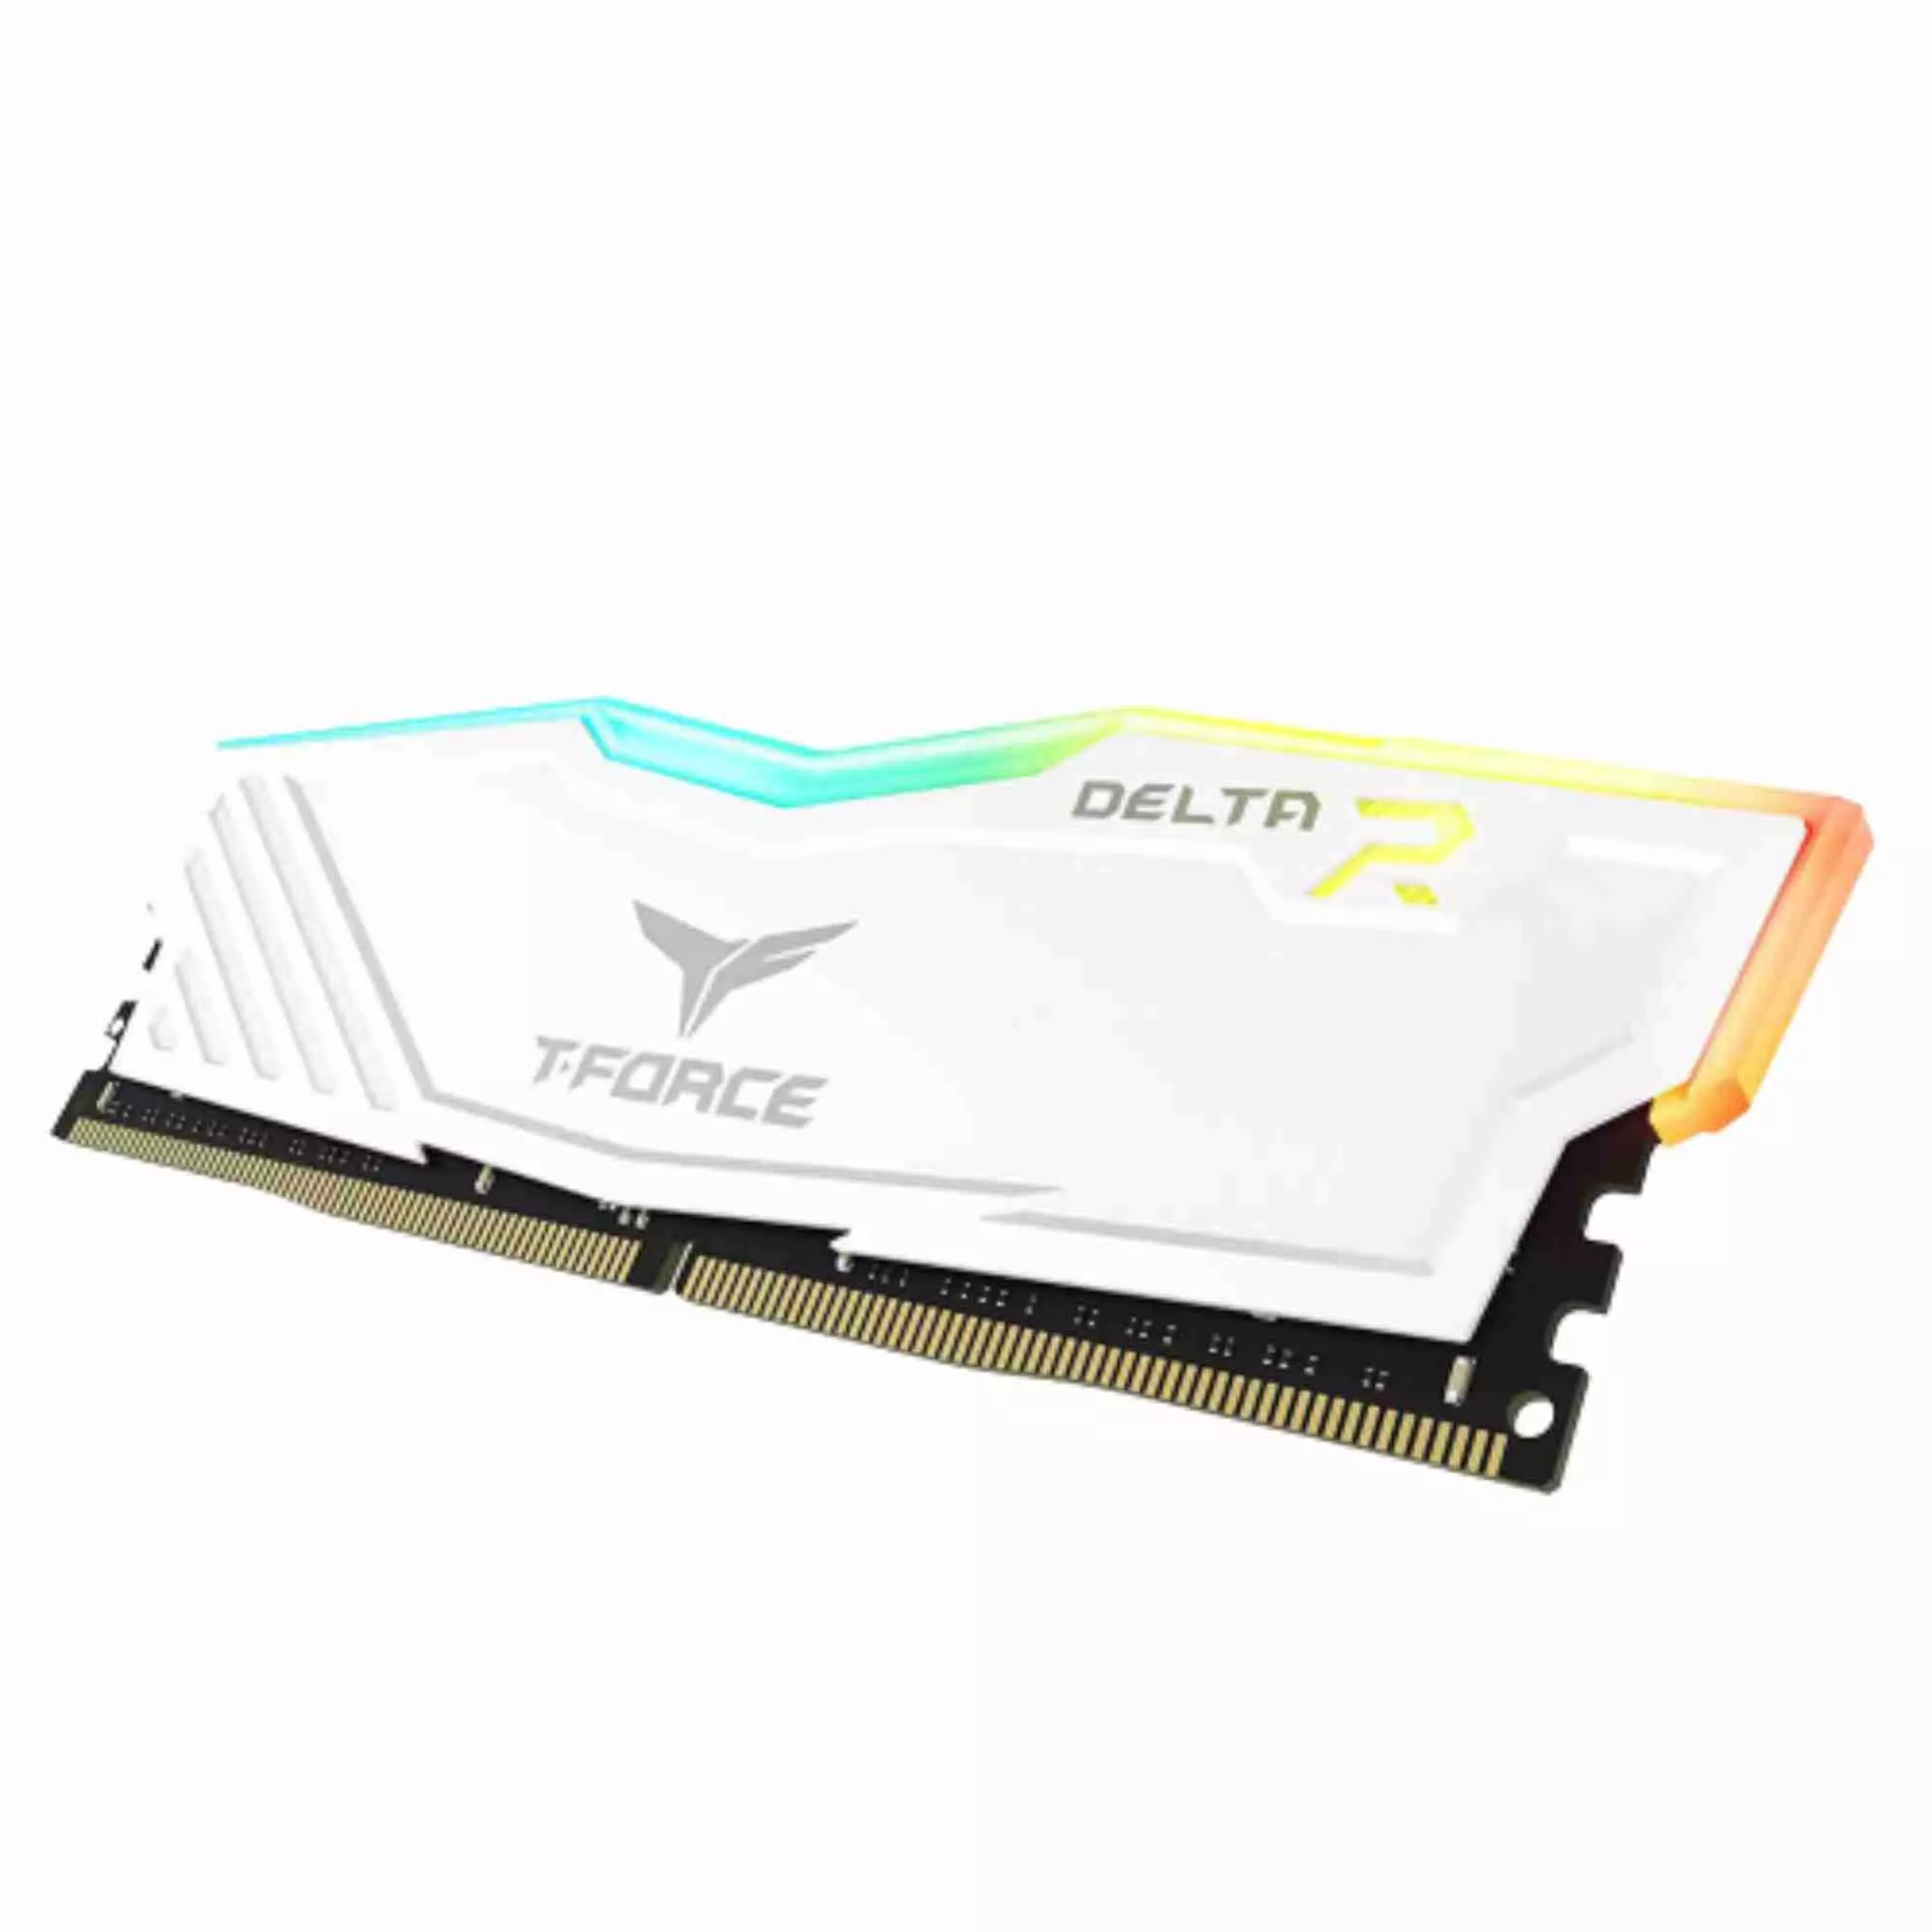 T-Force Delta RGB DDR4 8GB/16GB 3200MHz (PC4-25600) CL16 Desktop Memory Module ram - White